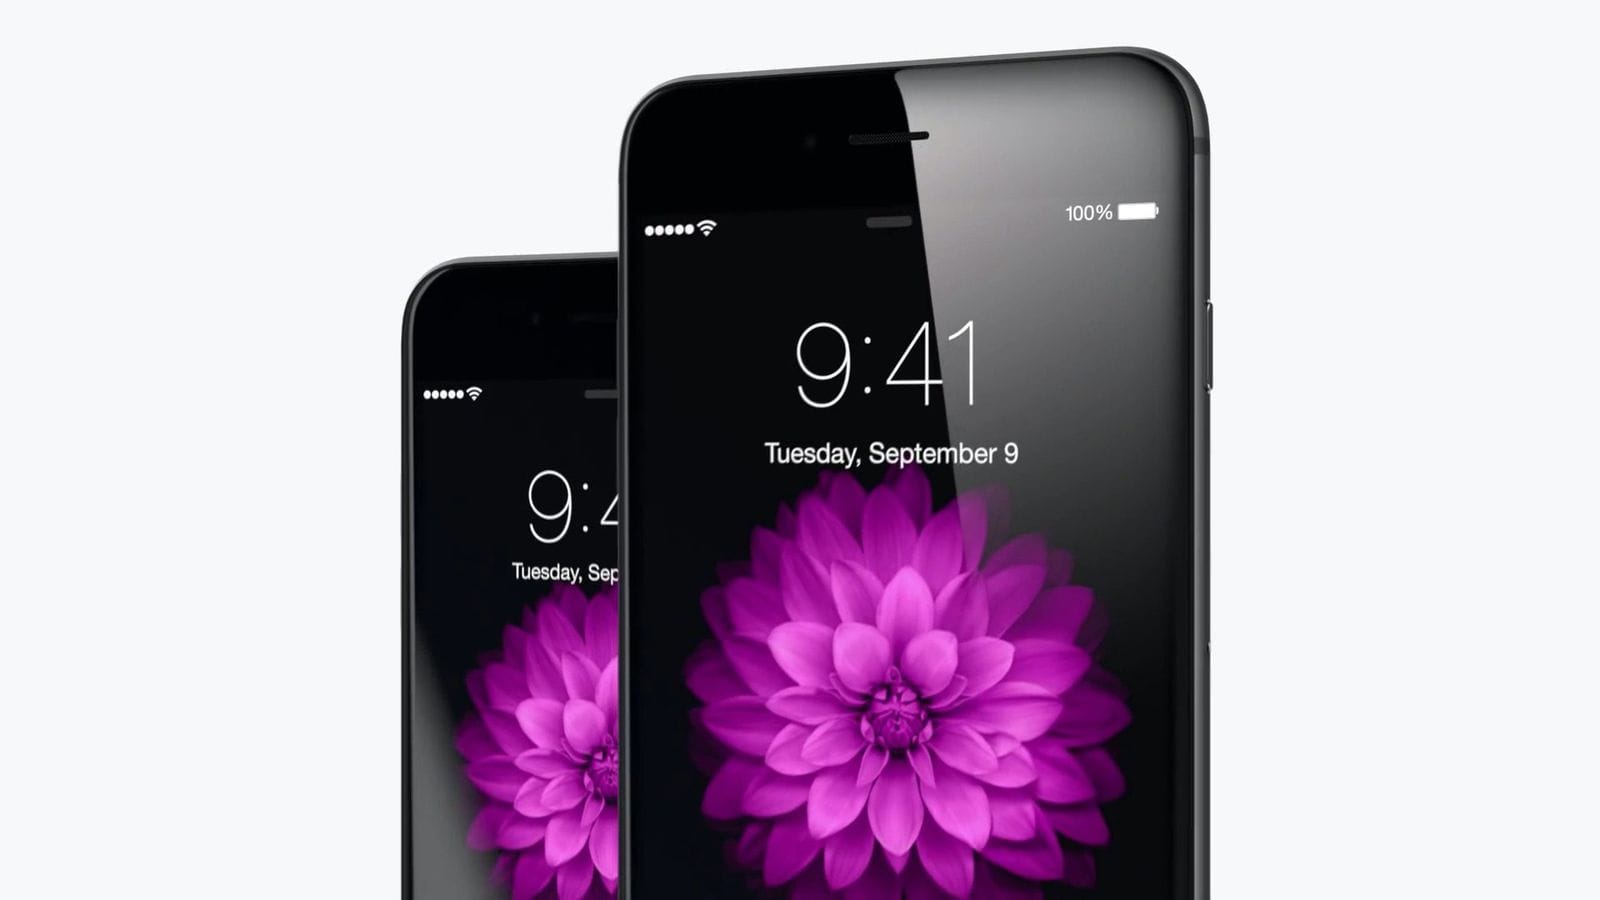 Apple добавила iPhone 6 Plus в список «устаревших» продуктов, а iPad mini 4 стал «винтажным»